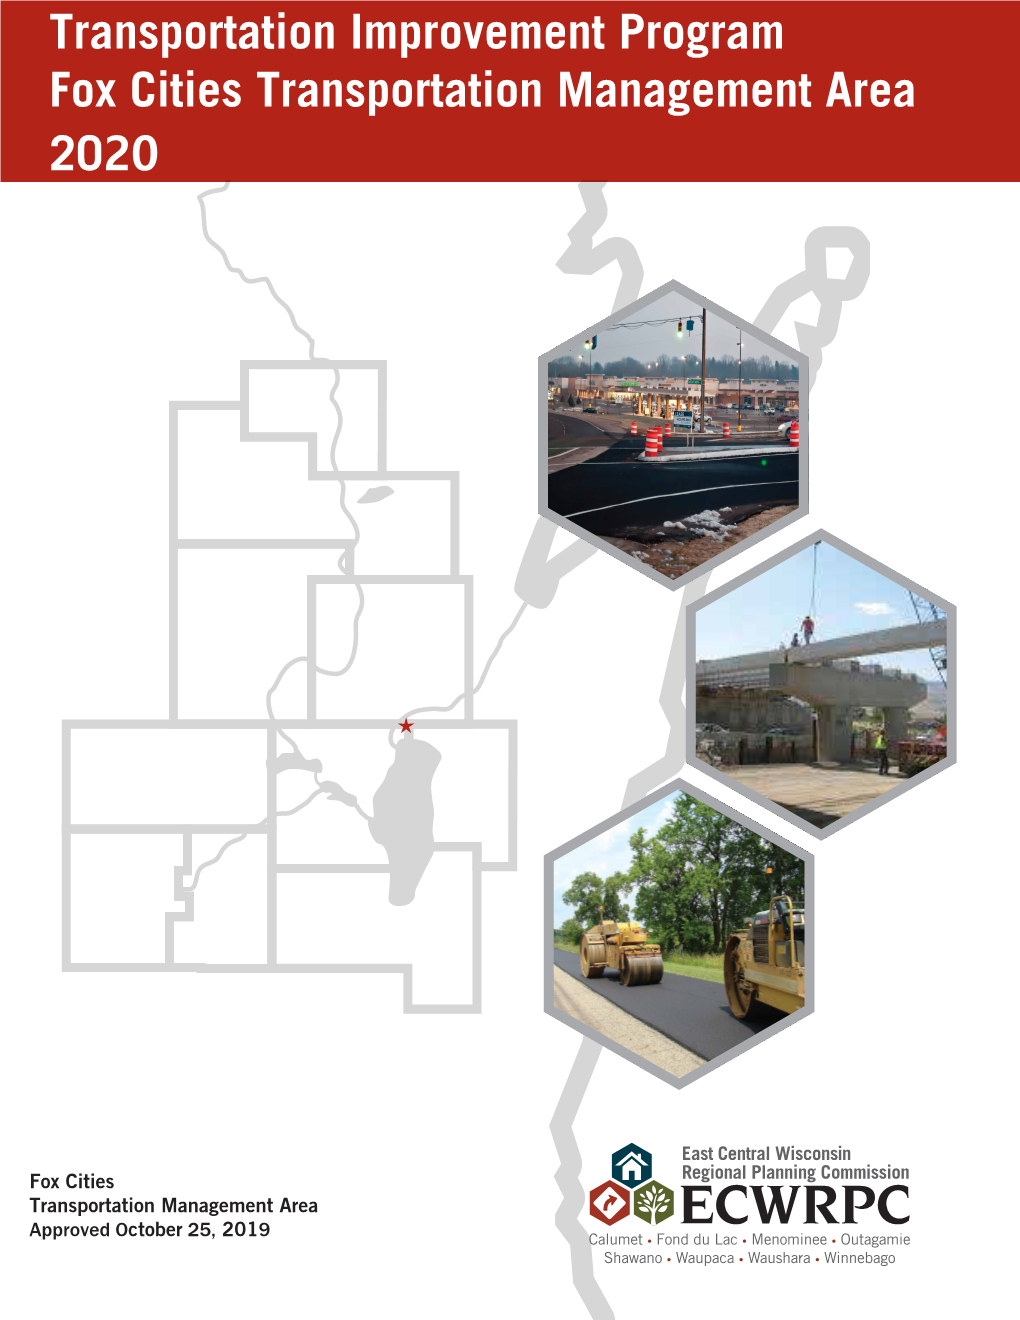 Transportation Improvement Program Fox Cities Transportation Management Area 2020